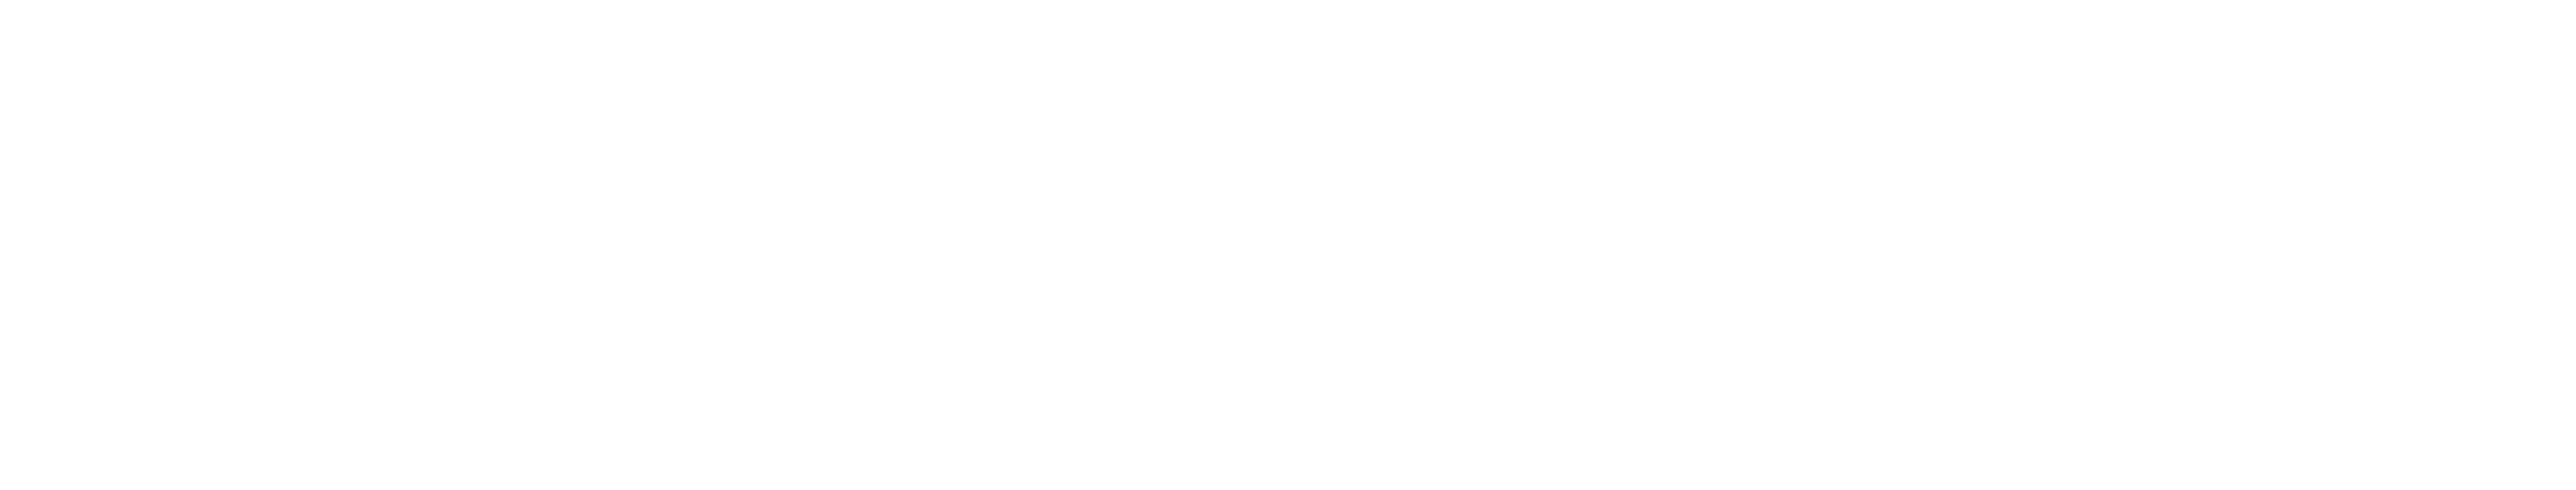 Global Cultural Adventurers